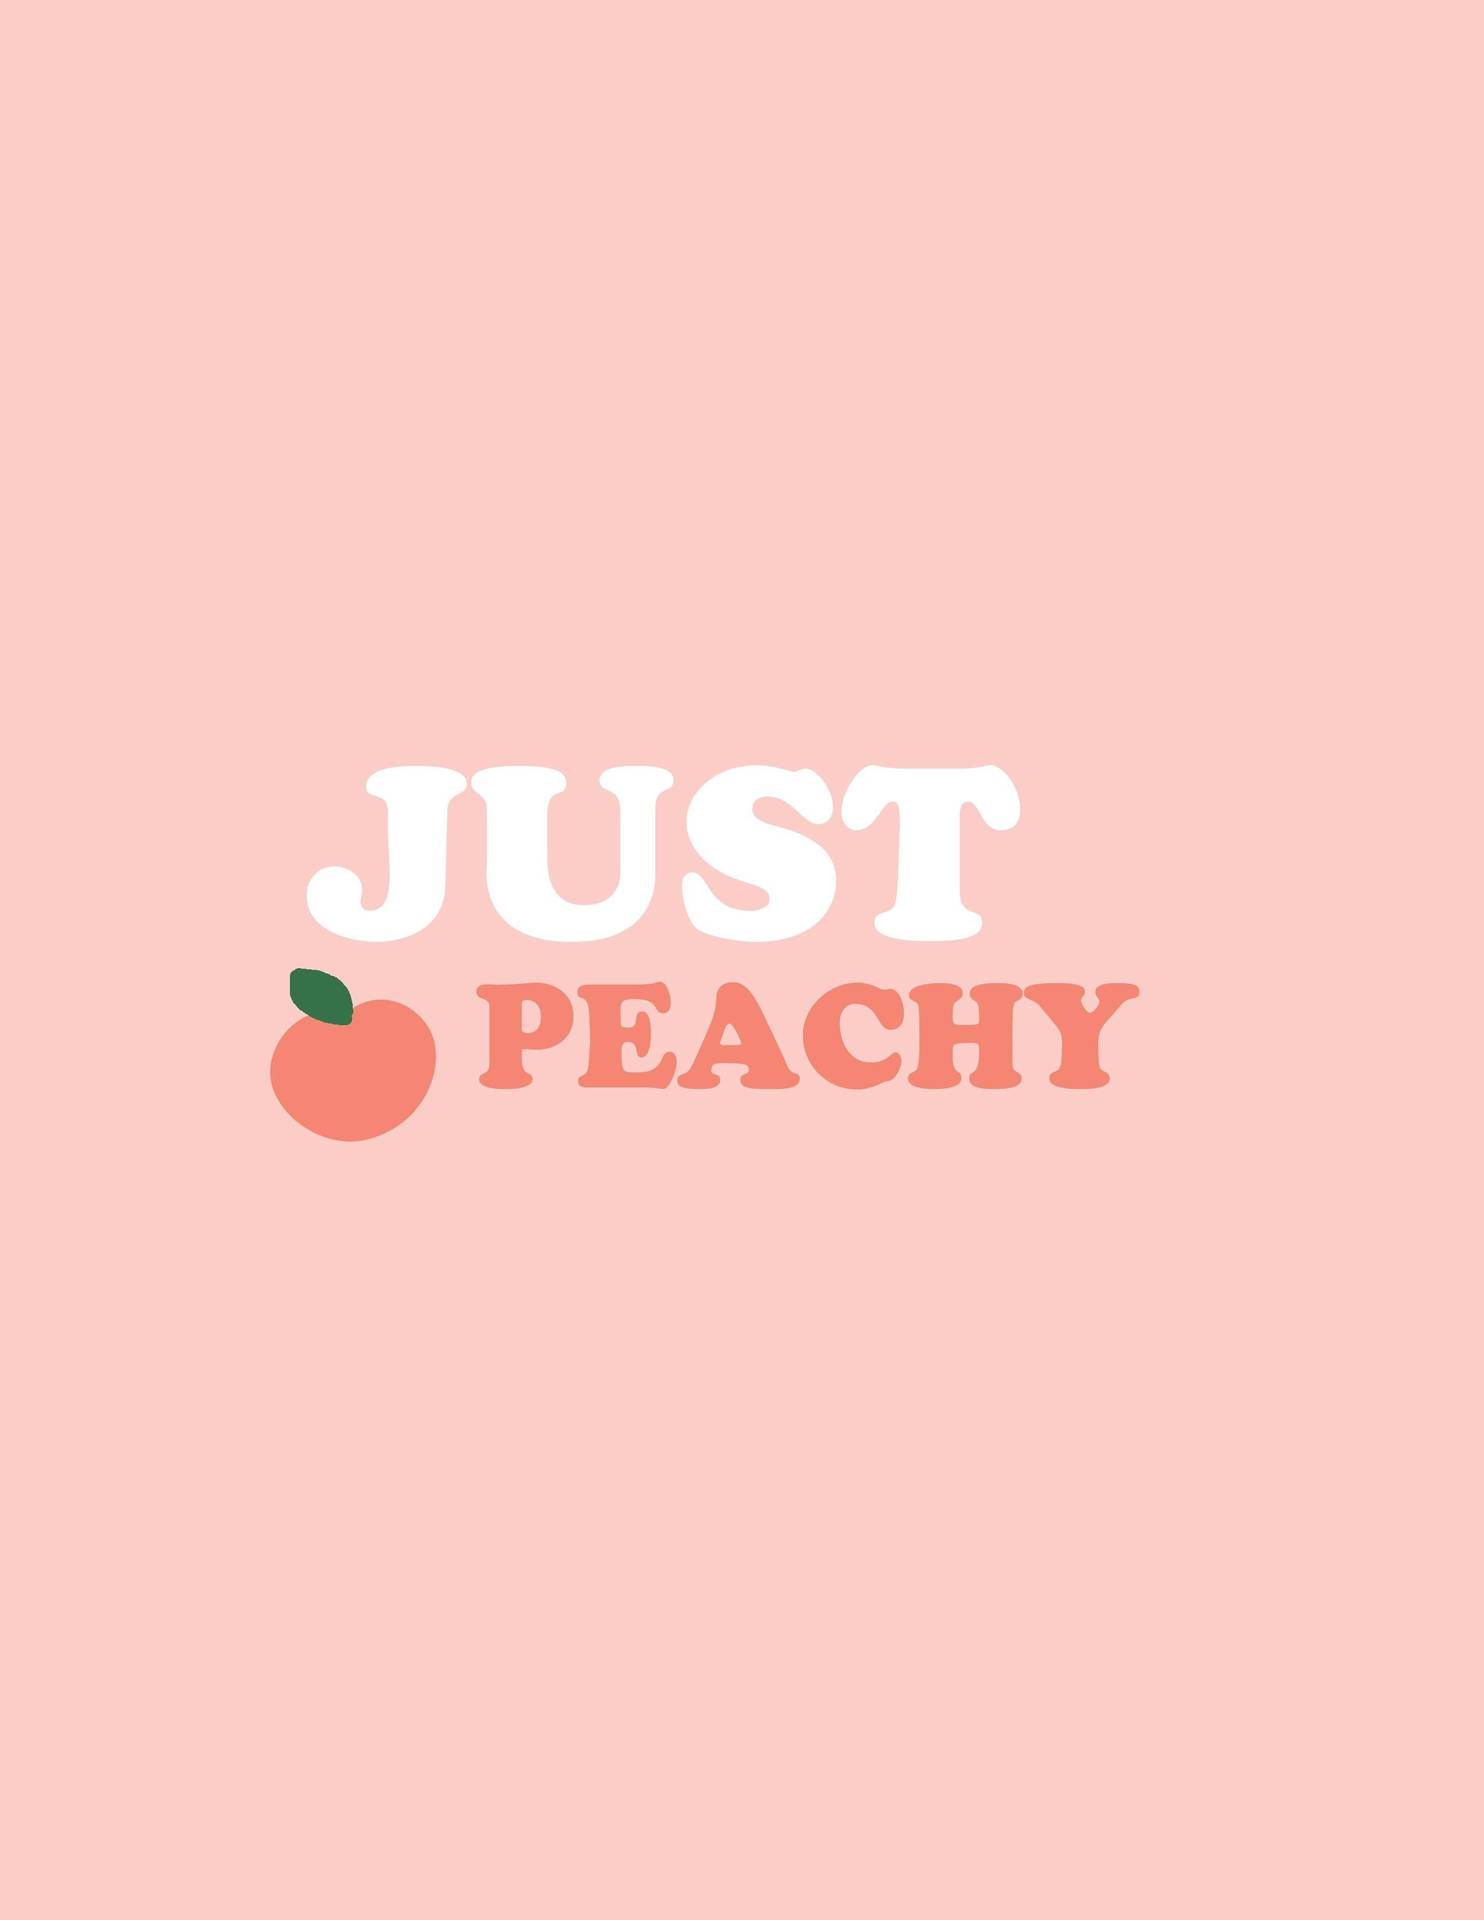 Aesthetic Peach Pink Just Peachy Wallpaper